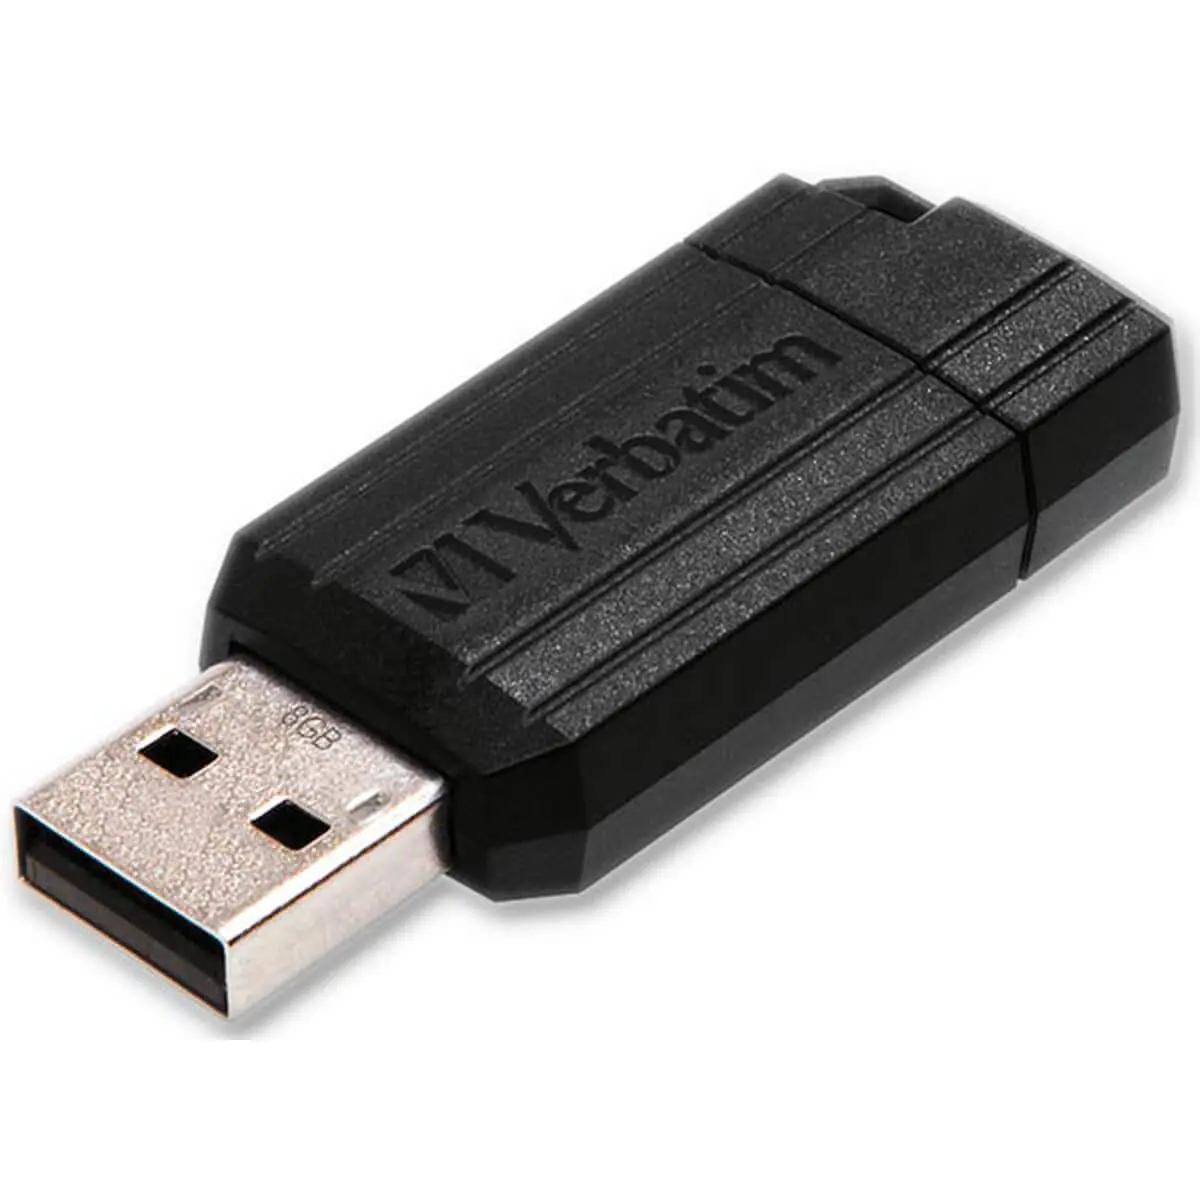 Clé USB 2.0 8 Go - Verbatim